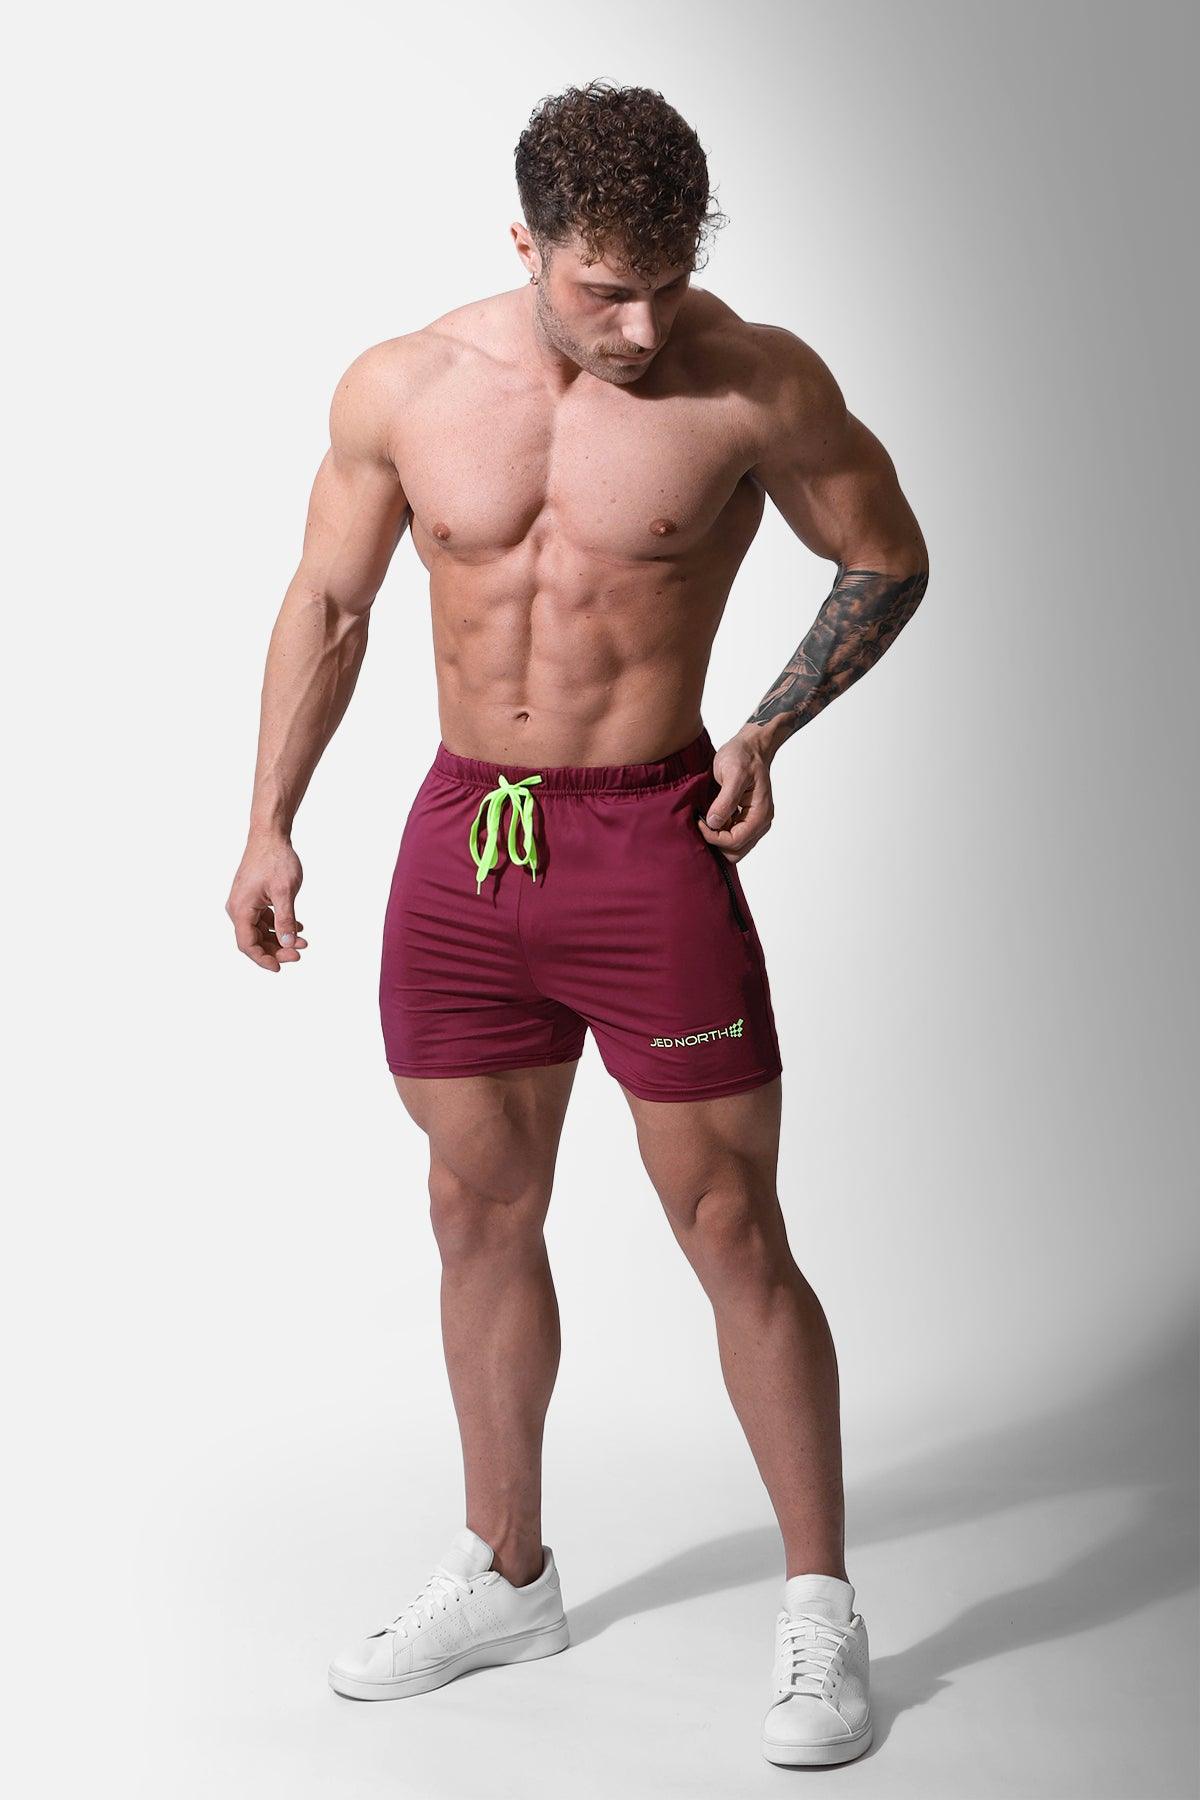 Agile Bodybuilding 4'' Shorts w Zipper Pockets - Maroon - Jed North